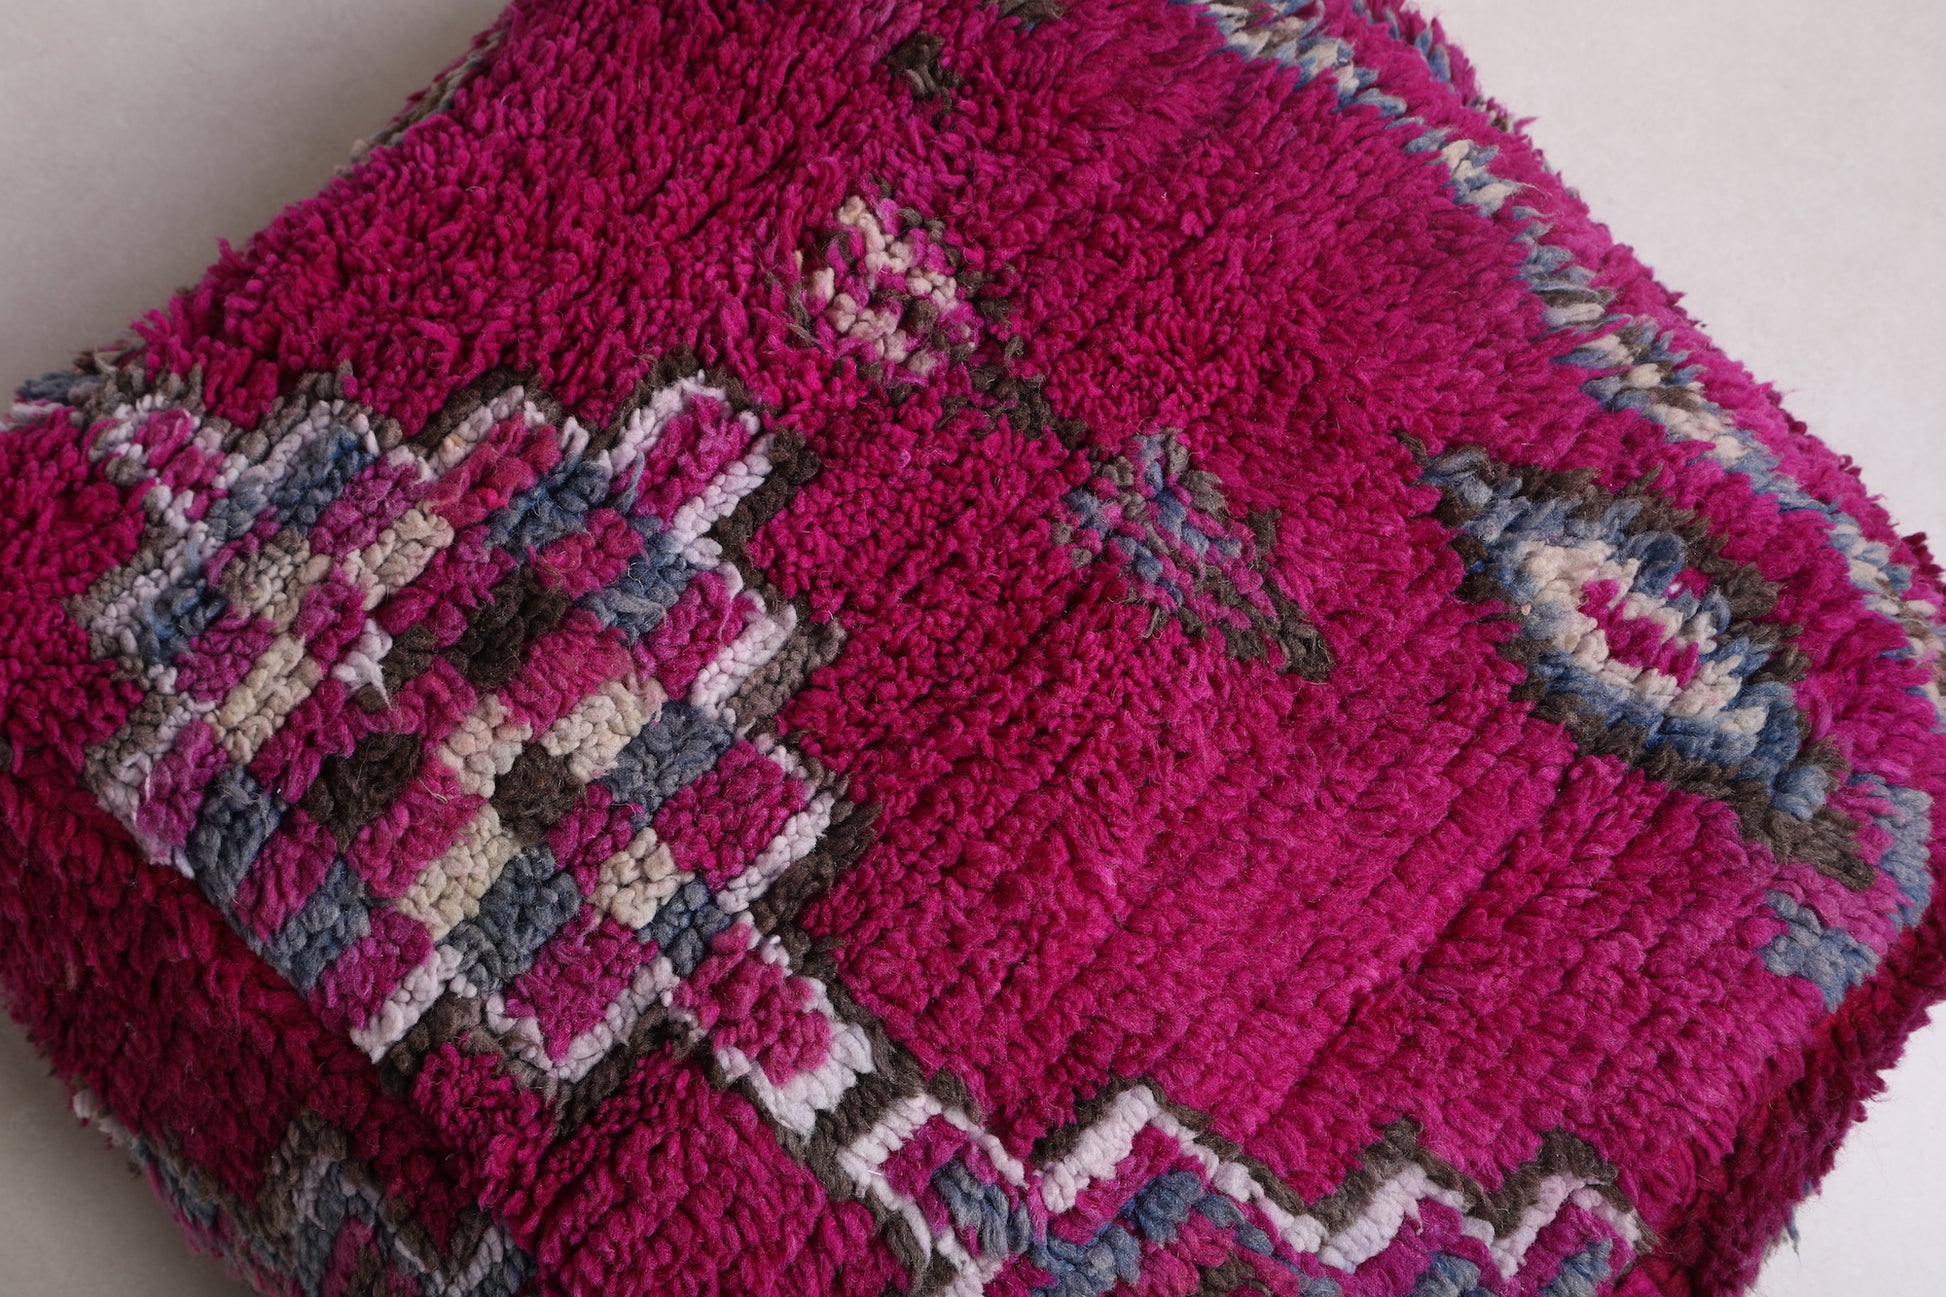 Moroccan Ottoman Decorative old rug Pouf